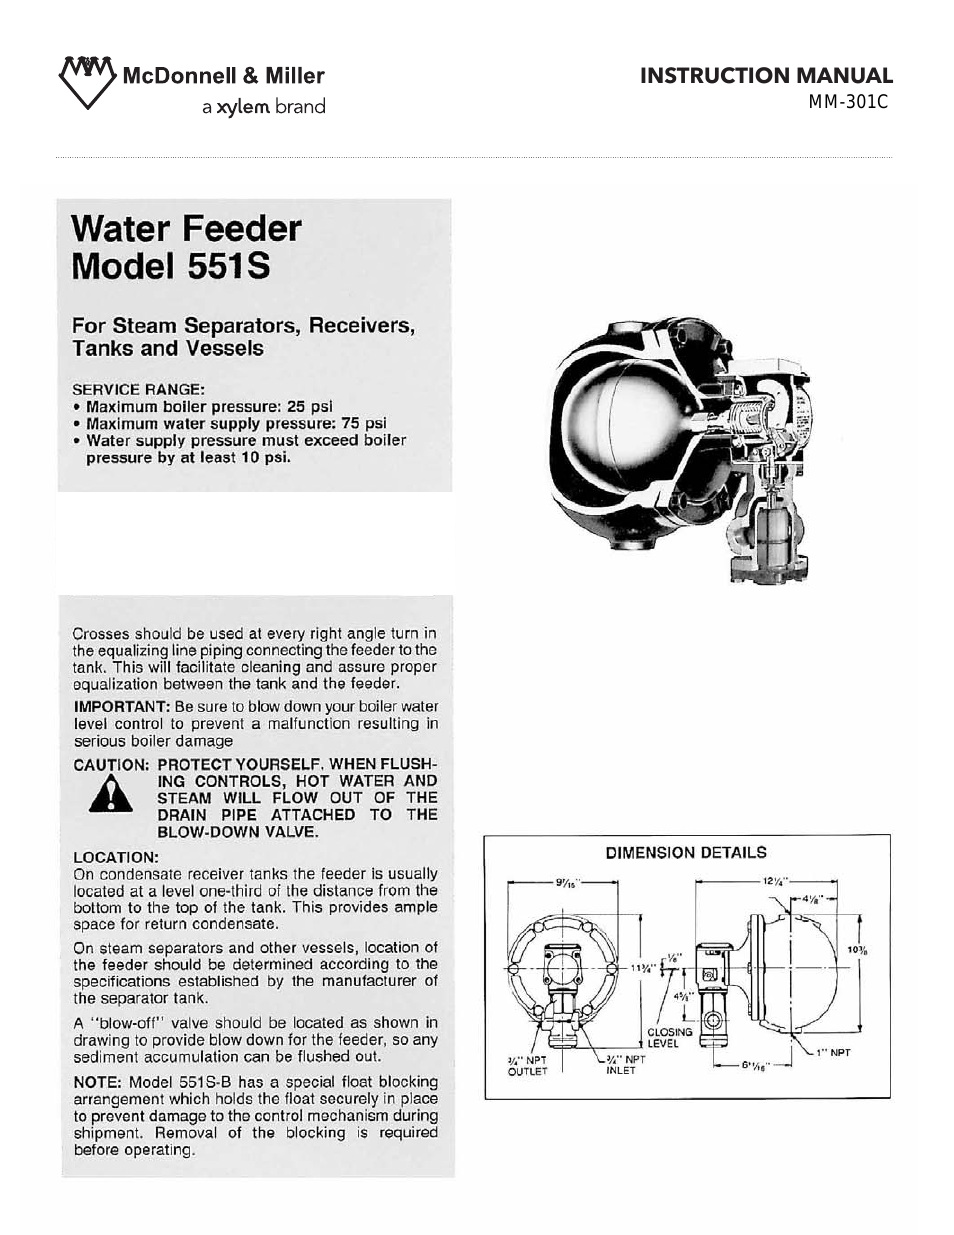 MM 301C Model 551S Water Feeder